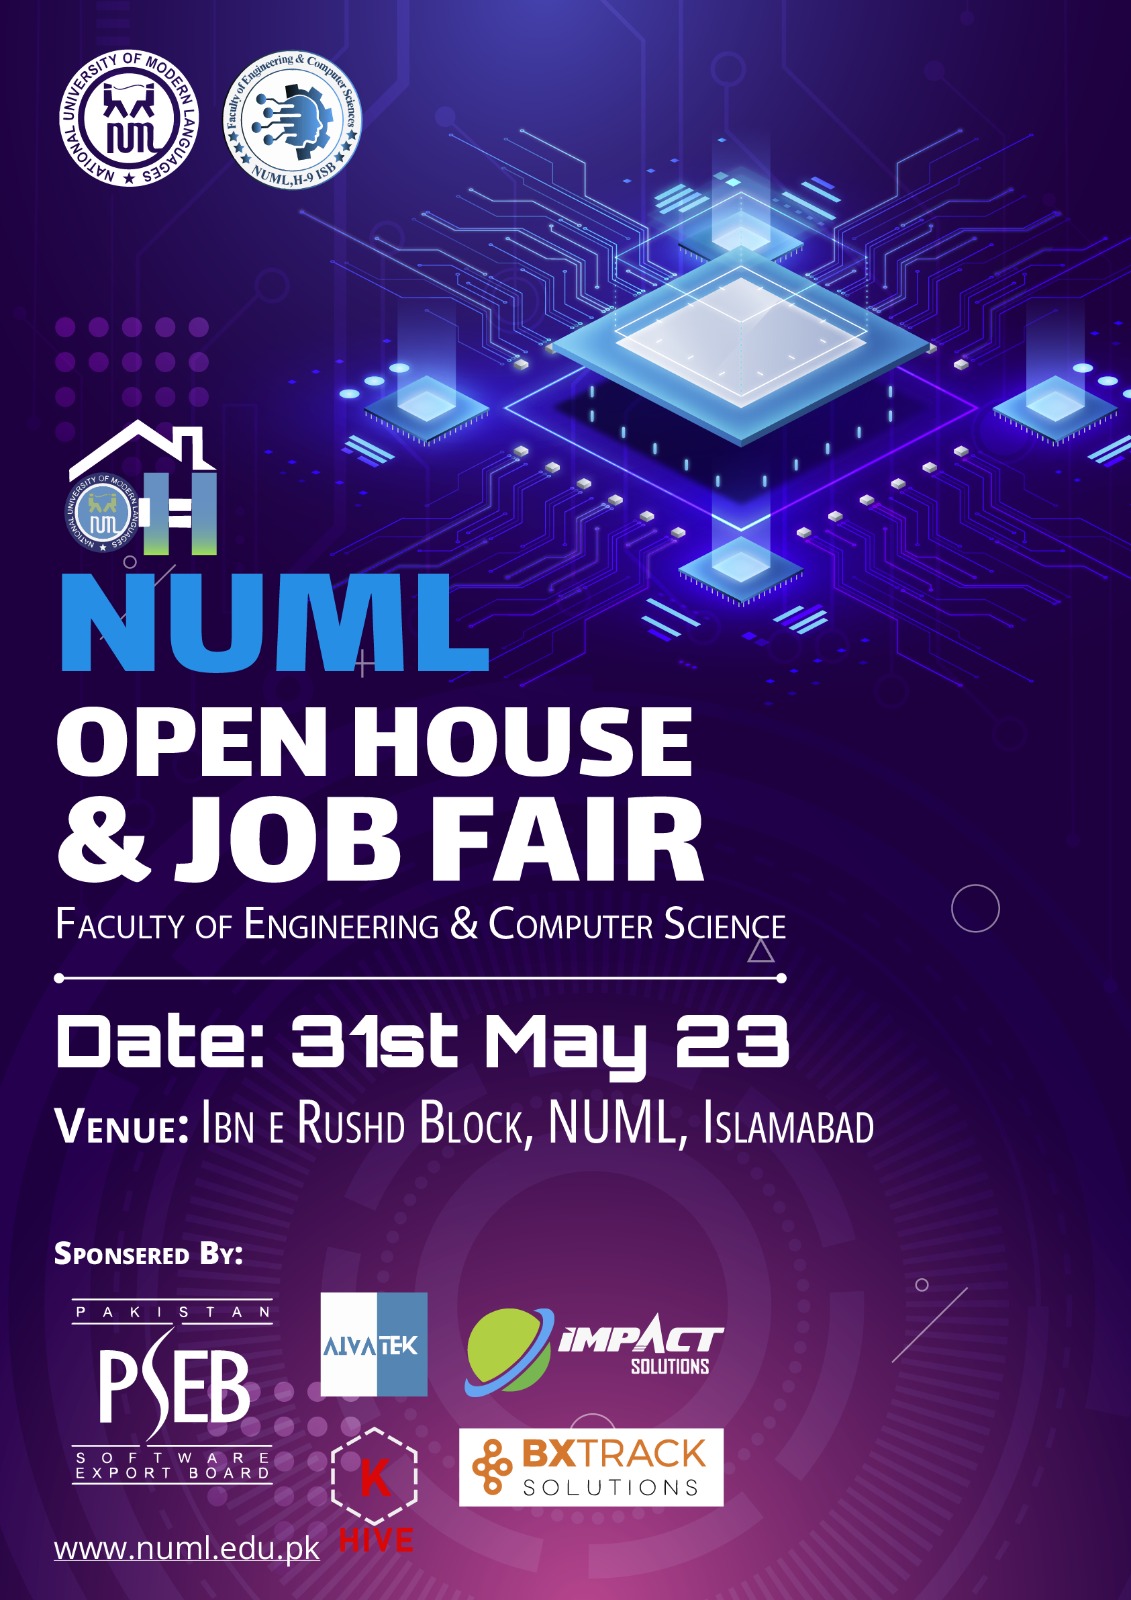 NUML Open House & Job Fair